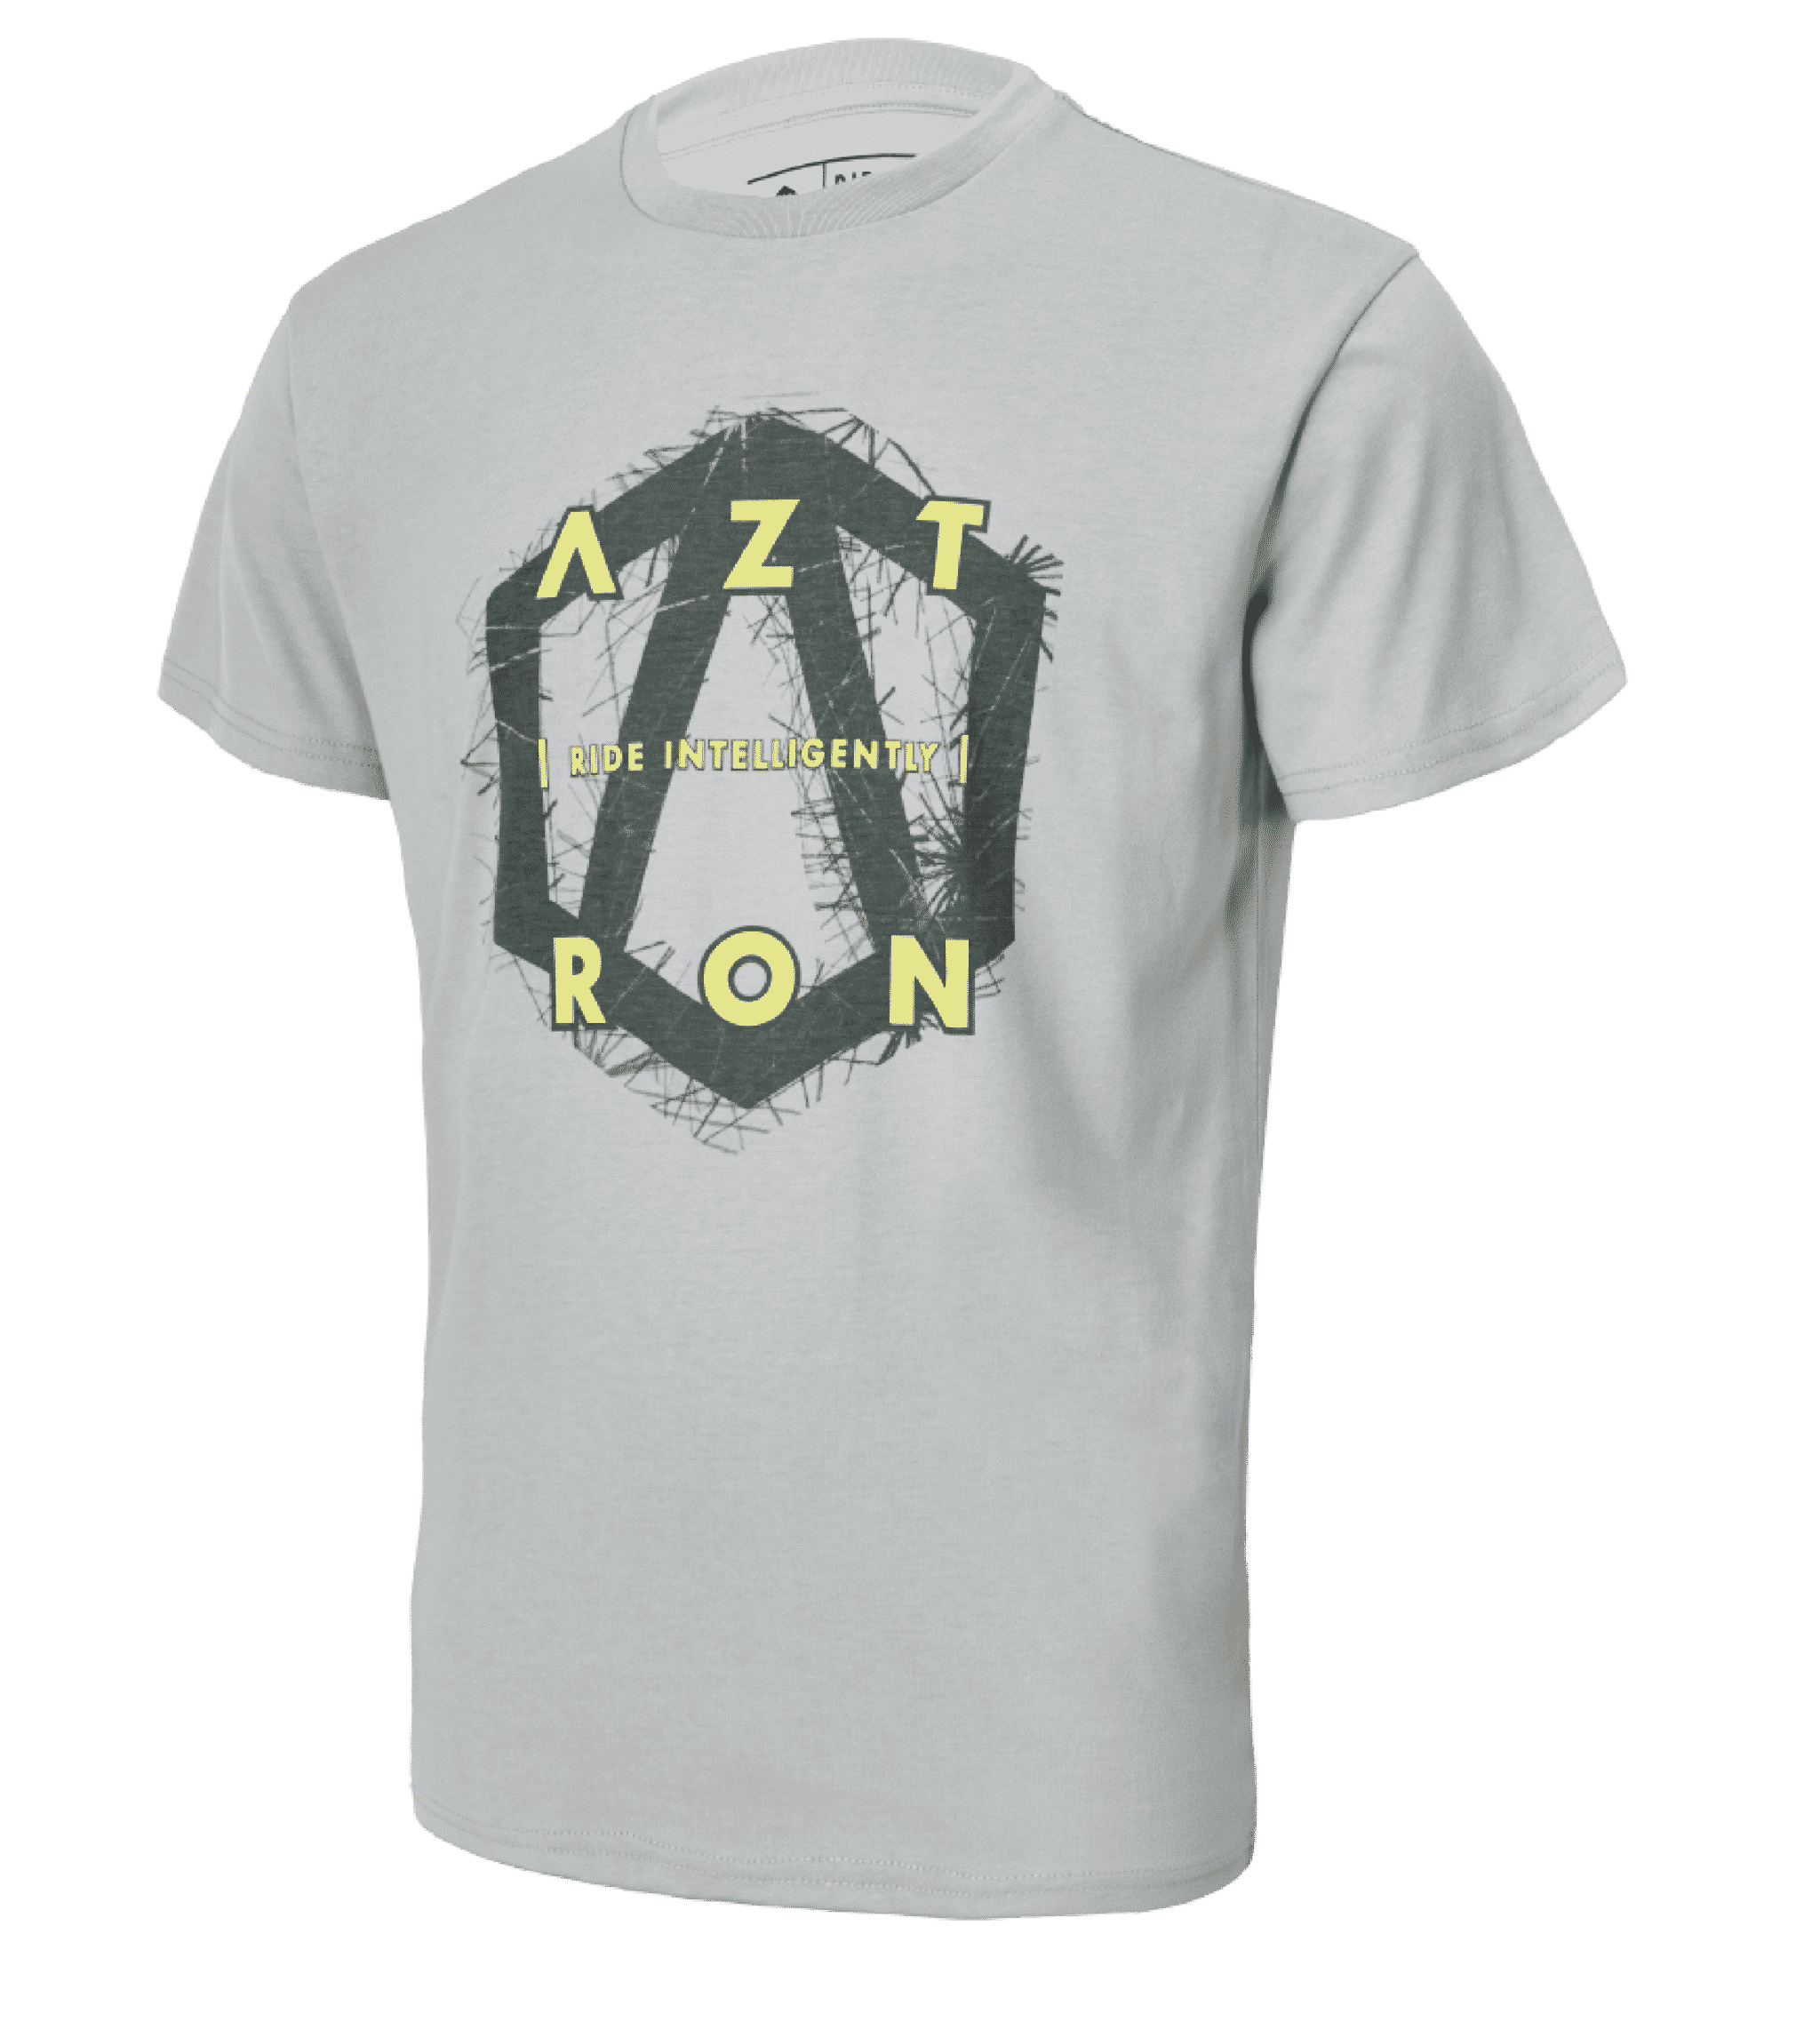 Aztron Tee Shirt Full Logo